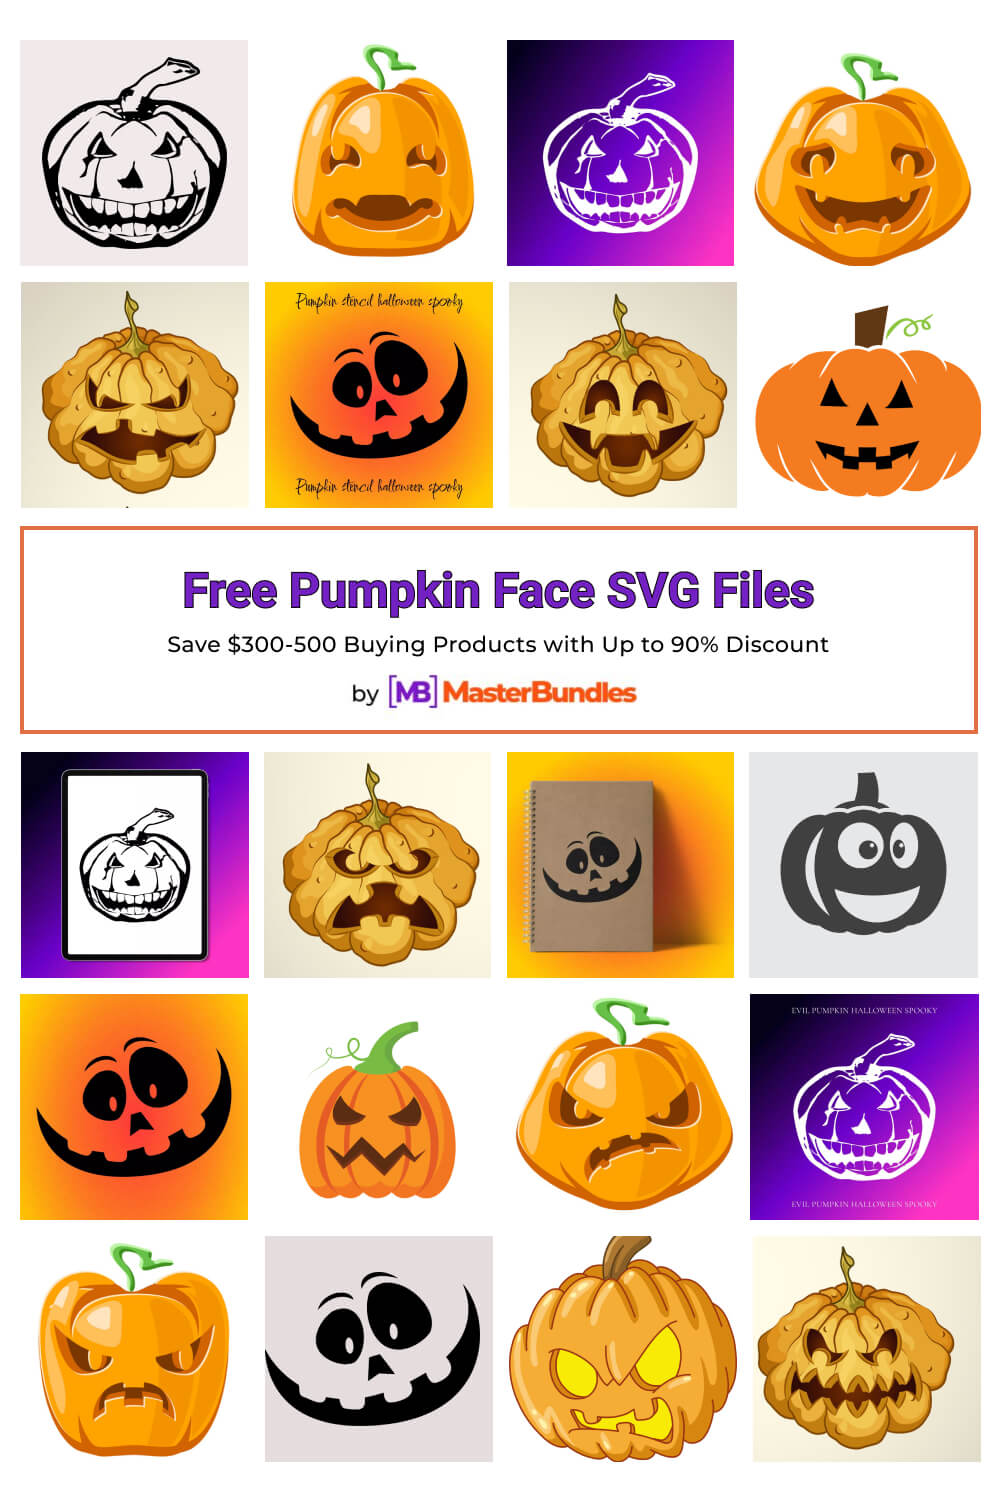 free pumpkin face svg files pinterest image.